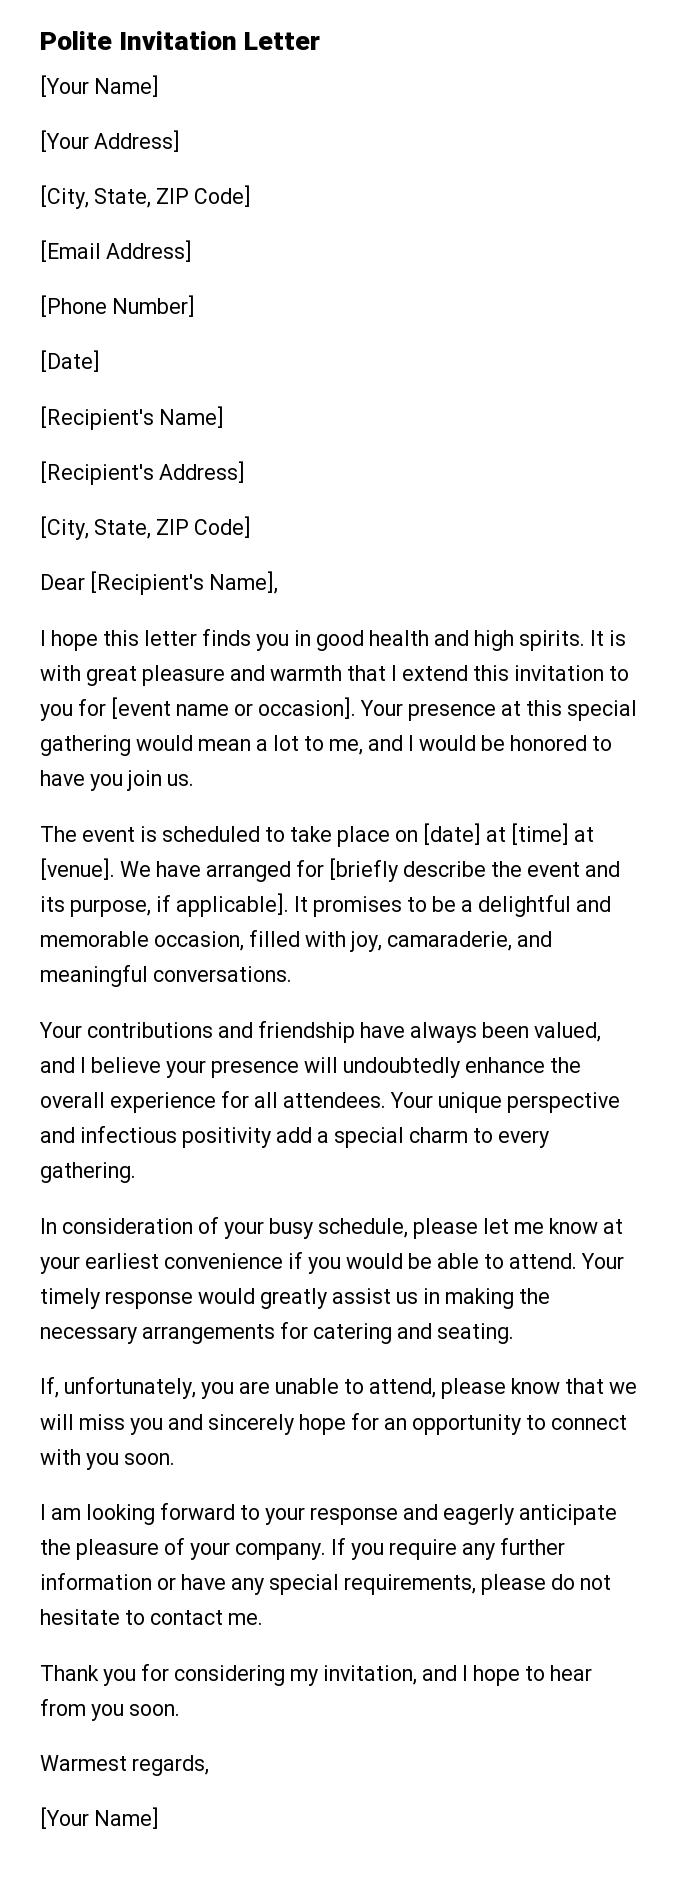 Polite Invitation Letter